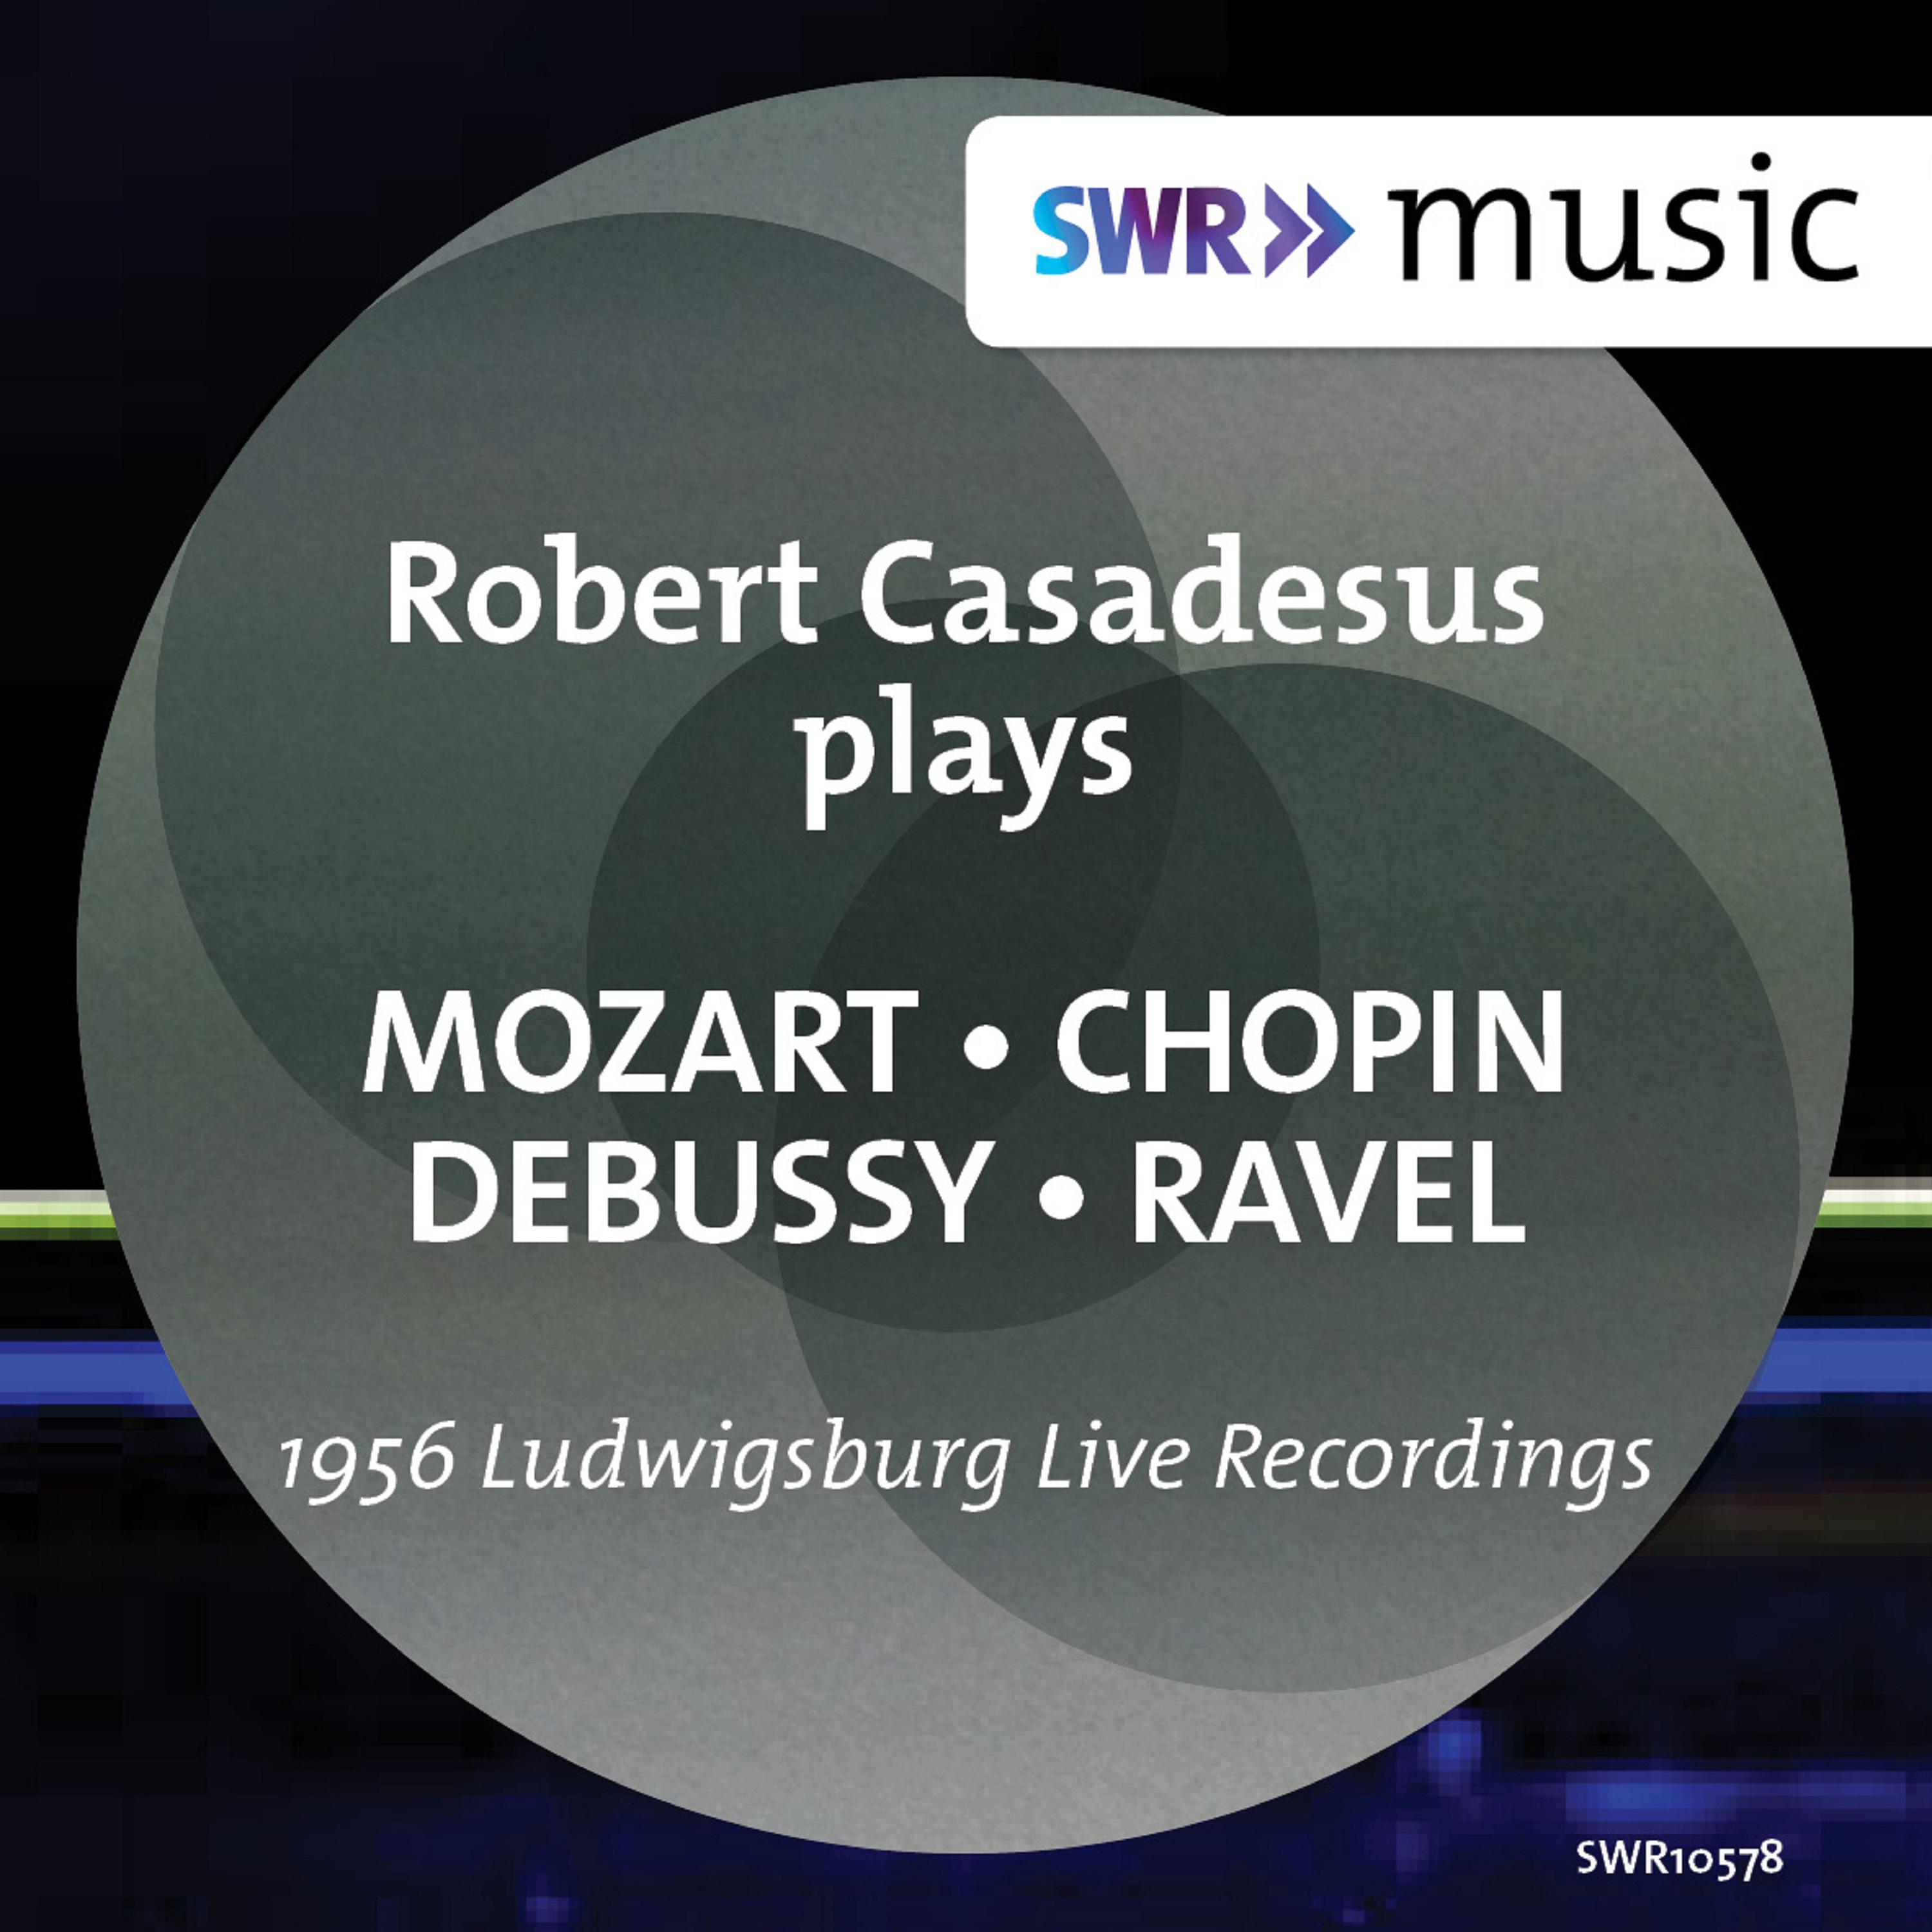 Piano Recital: Casadesus, Robert - MOZART, W.A. / CHOPIN, F. / DEBUSSY, C. / RAVEL, M. (1956)